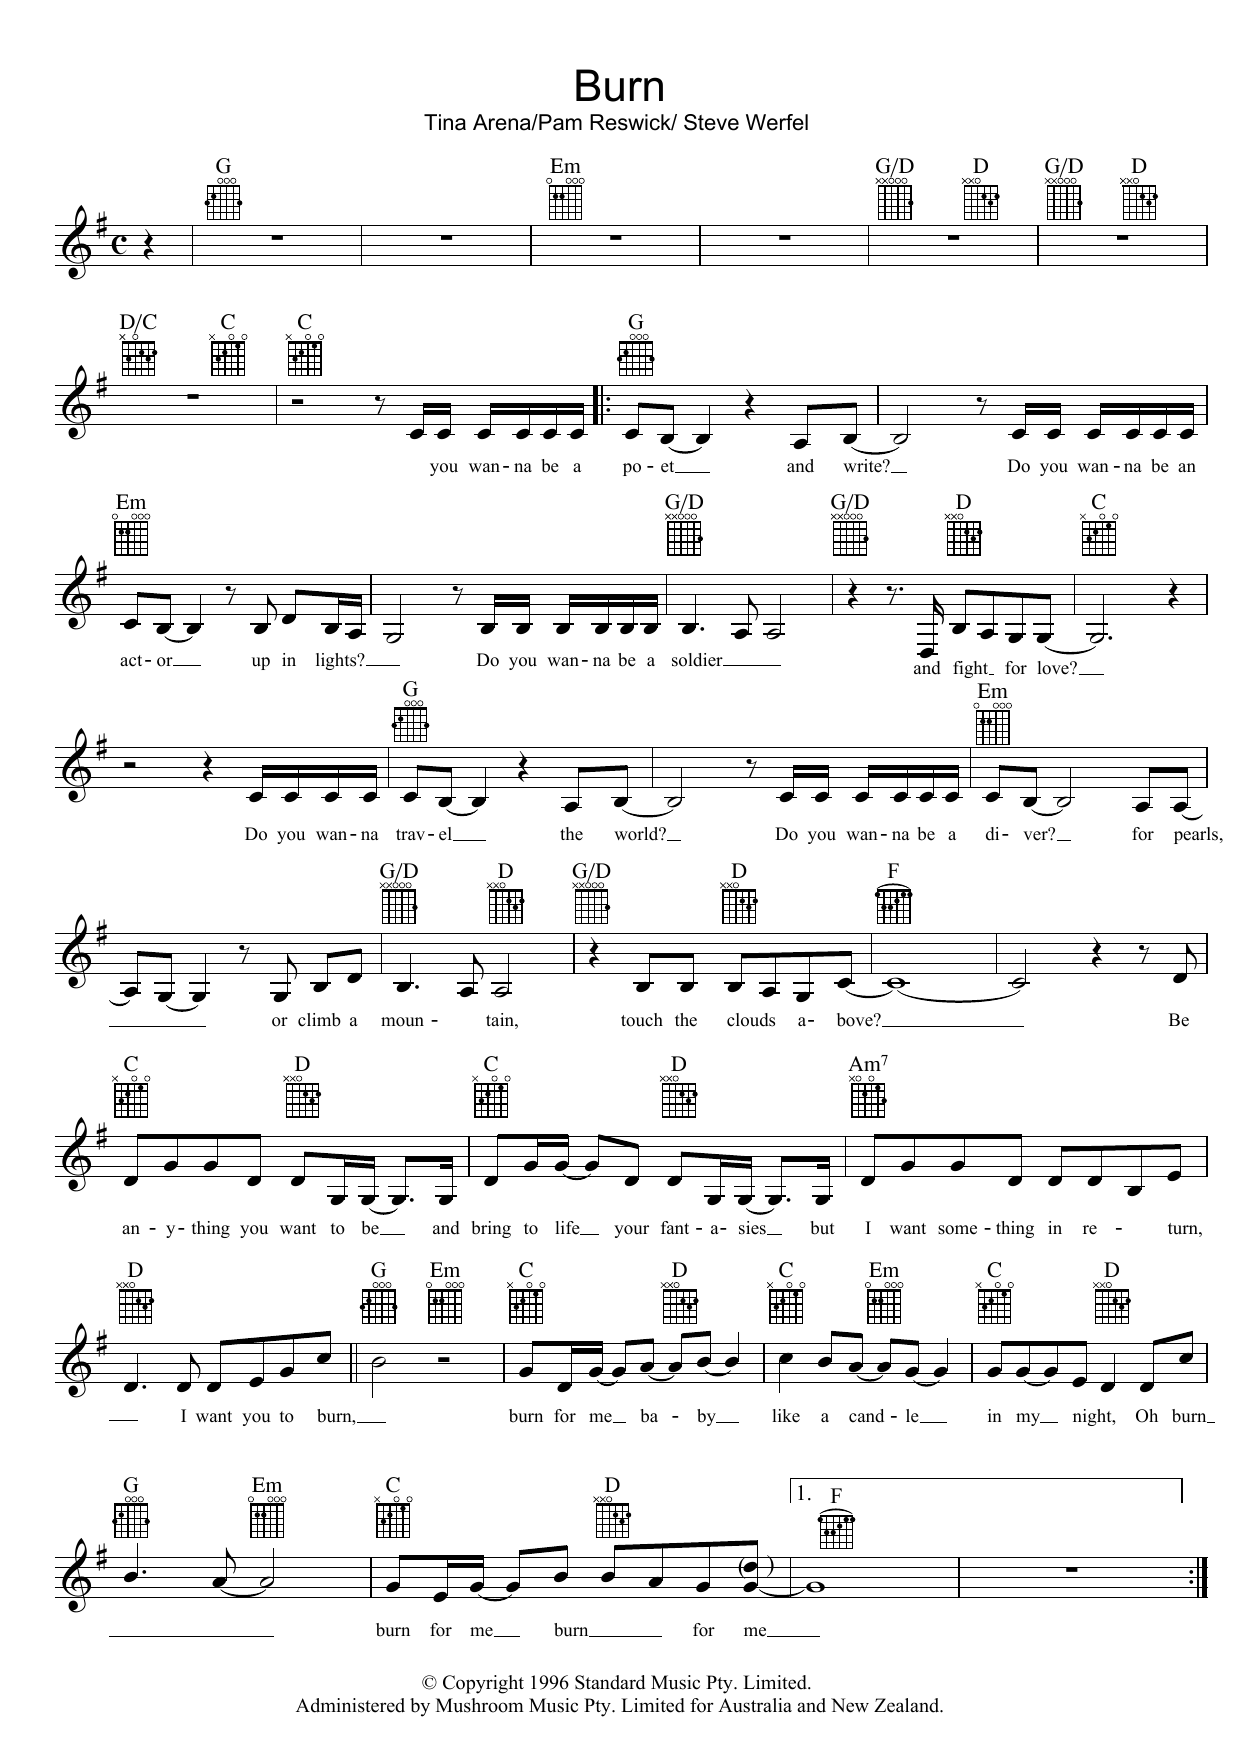 Tina Arena Burn Sheet Music Notes & Chords for Melody Line, Lyrics & Chords - Download or Print PDF